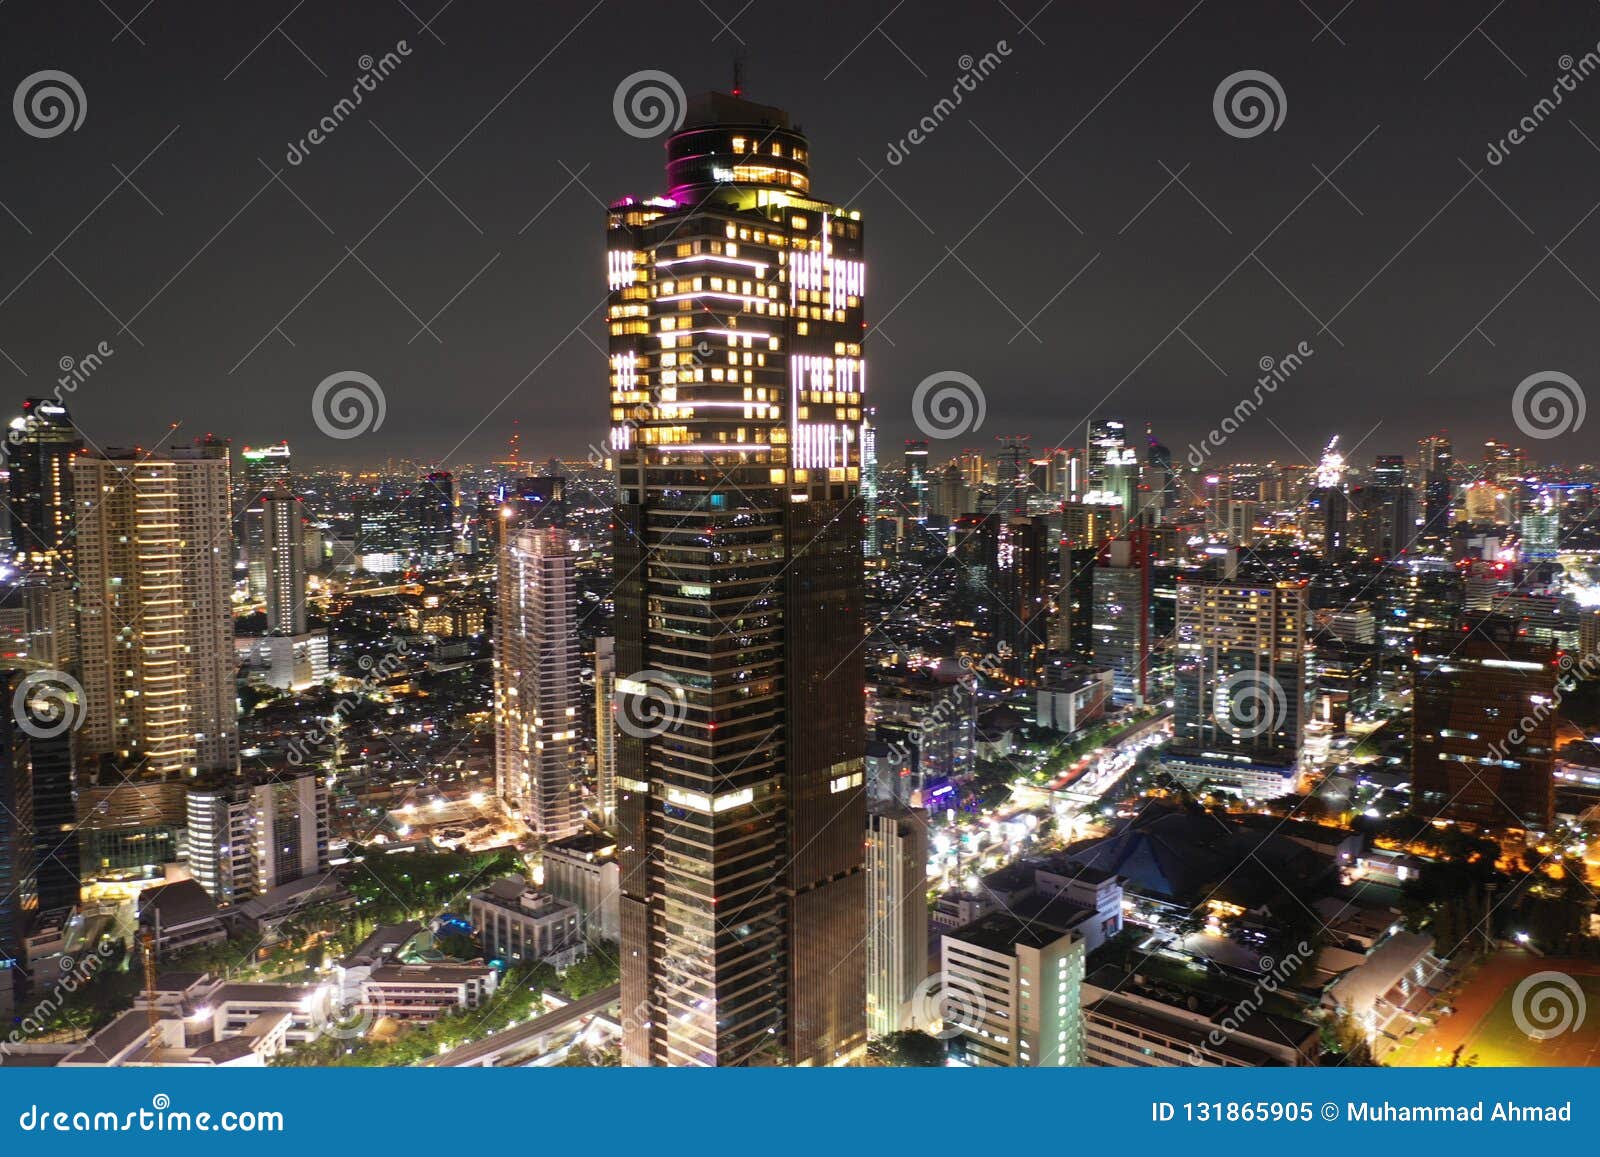 Gama Tower South Jakarta  Indonesia Stock Image Image 